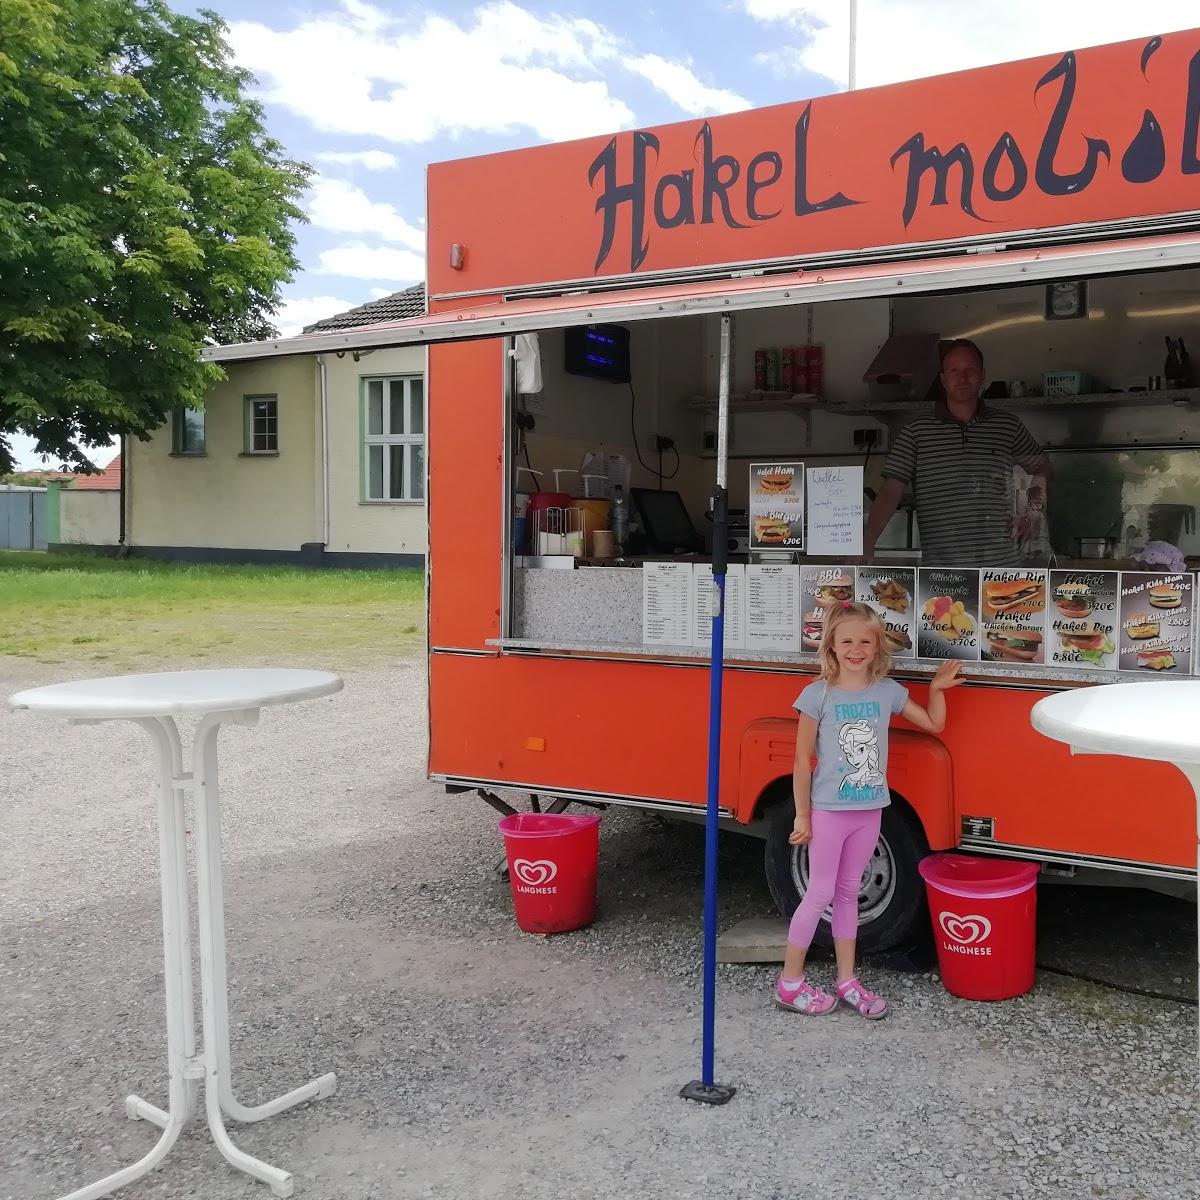 Restaurant "Hakel mobil" in  Hakeborn